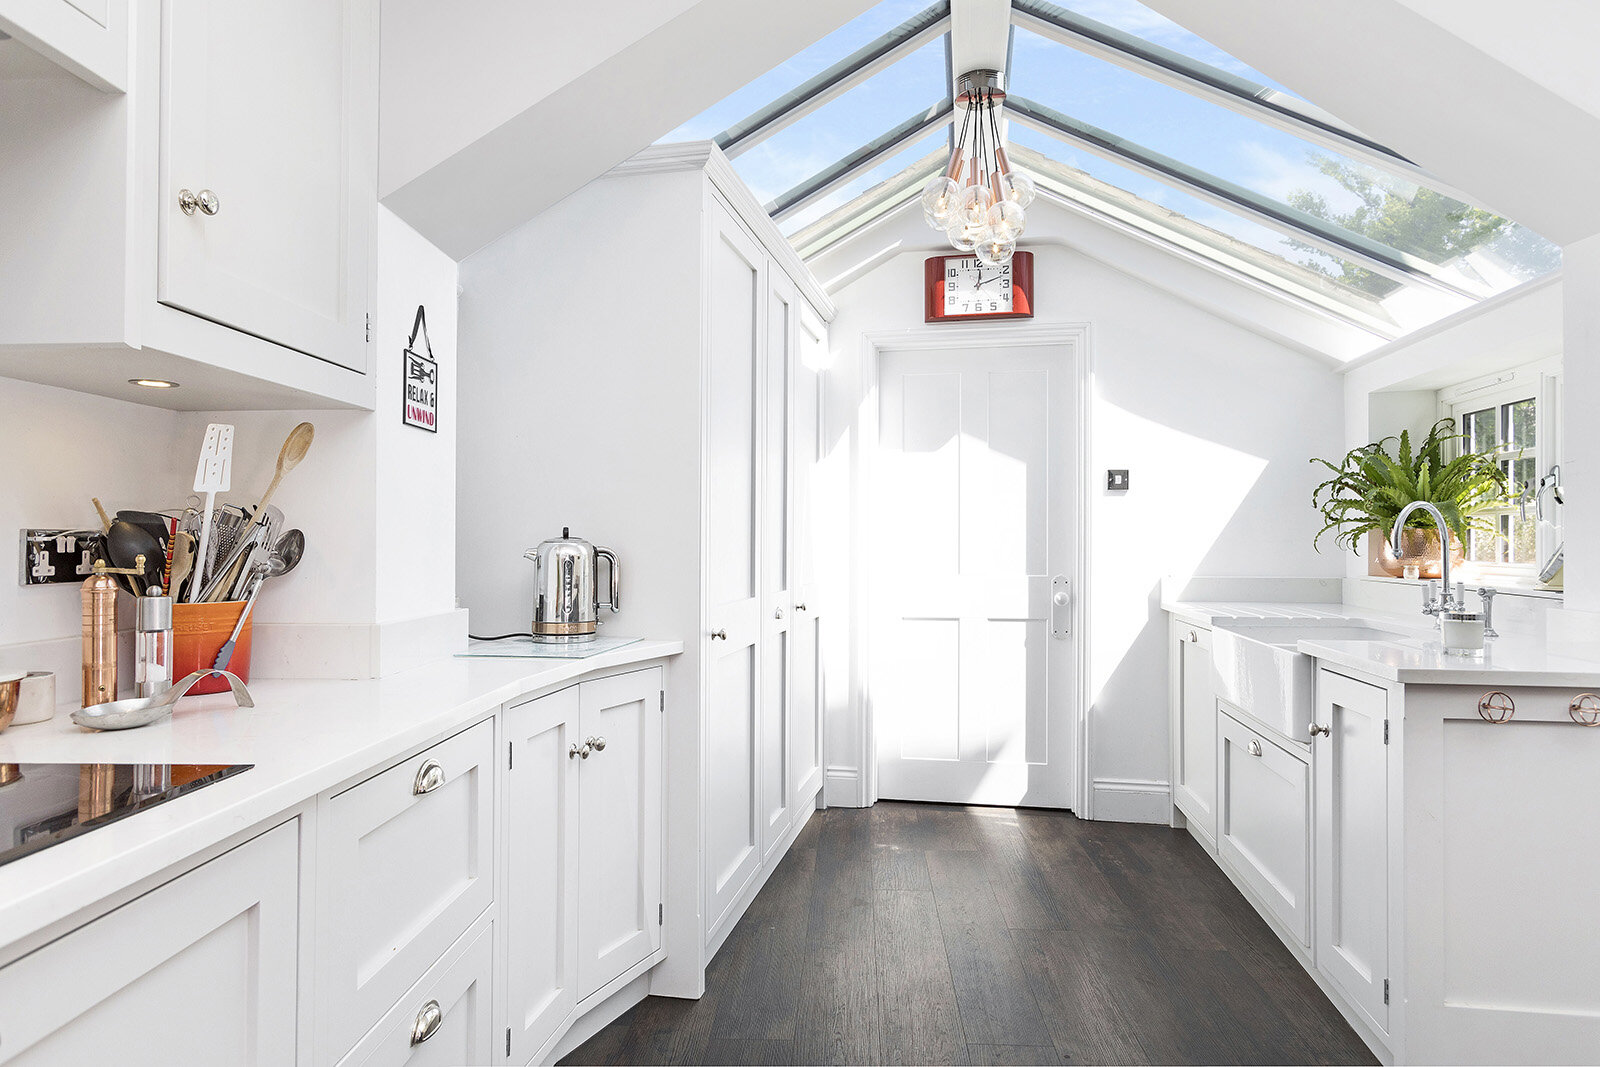 white paint wooden kitchen bespoke design interior photography thebestshot.co.uk.jpg